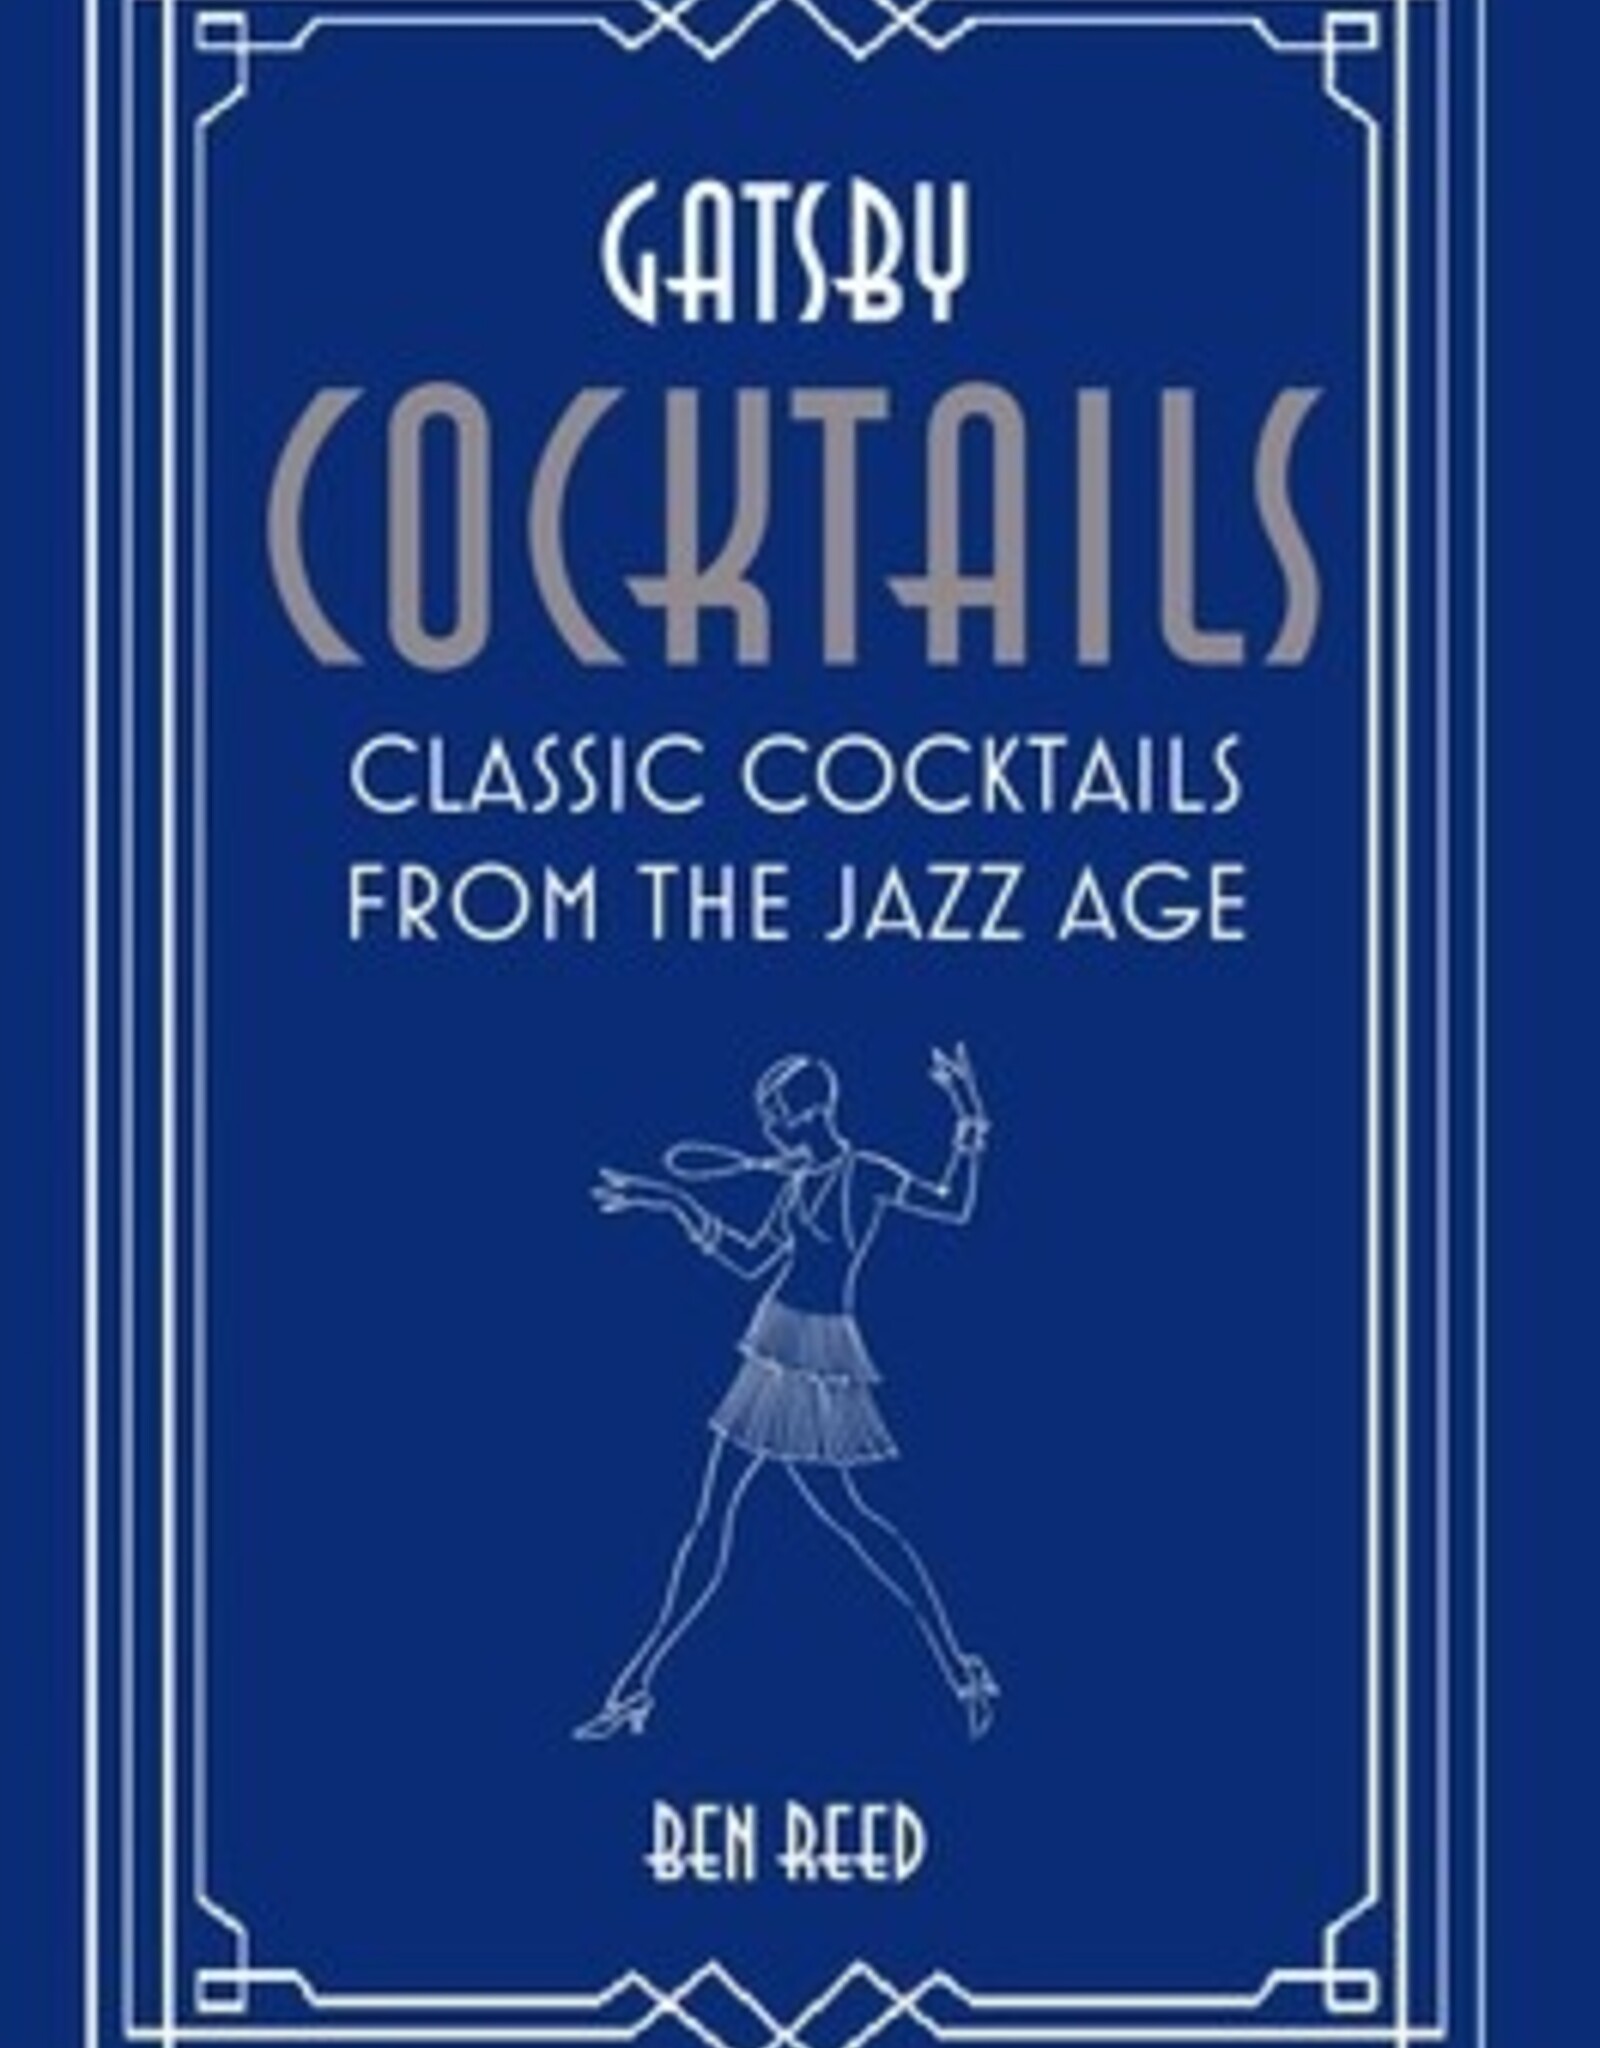 Simon & Schuster Gatsby Cocktails